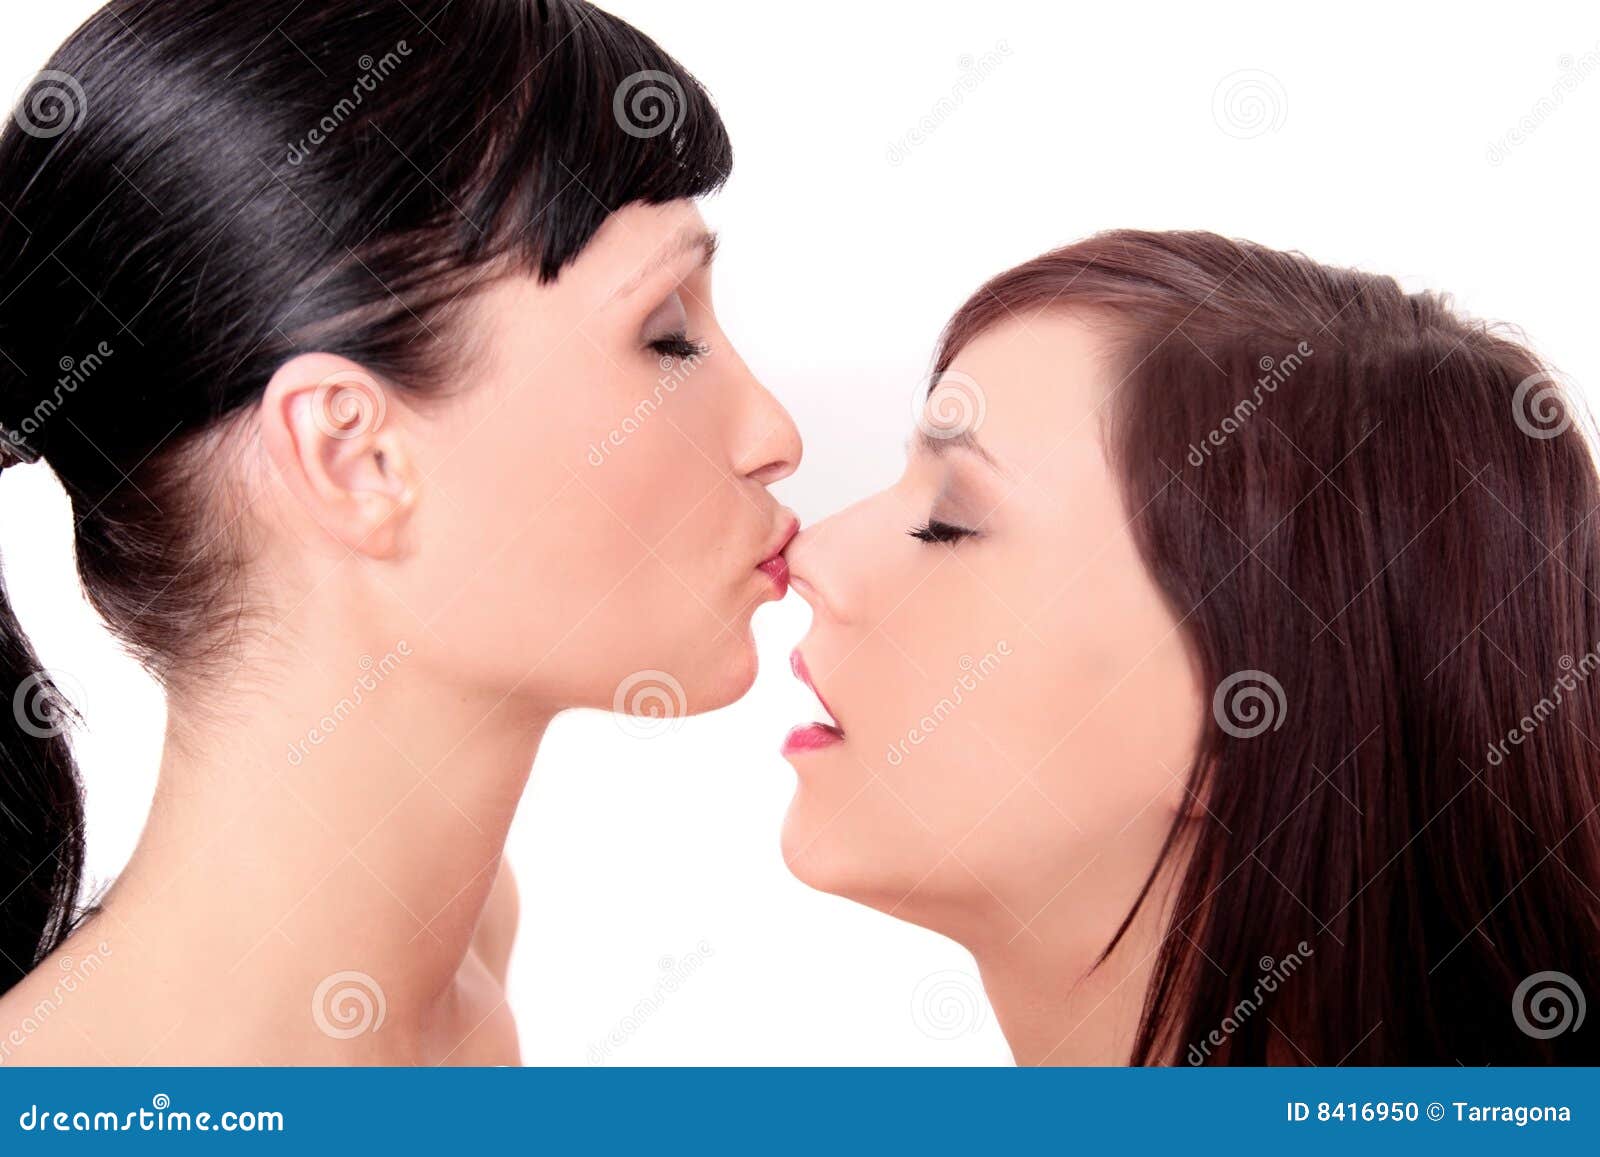 Hot Asian Girls Kissing